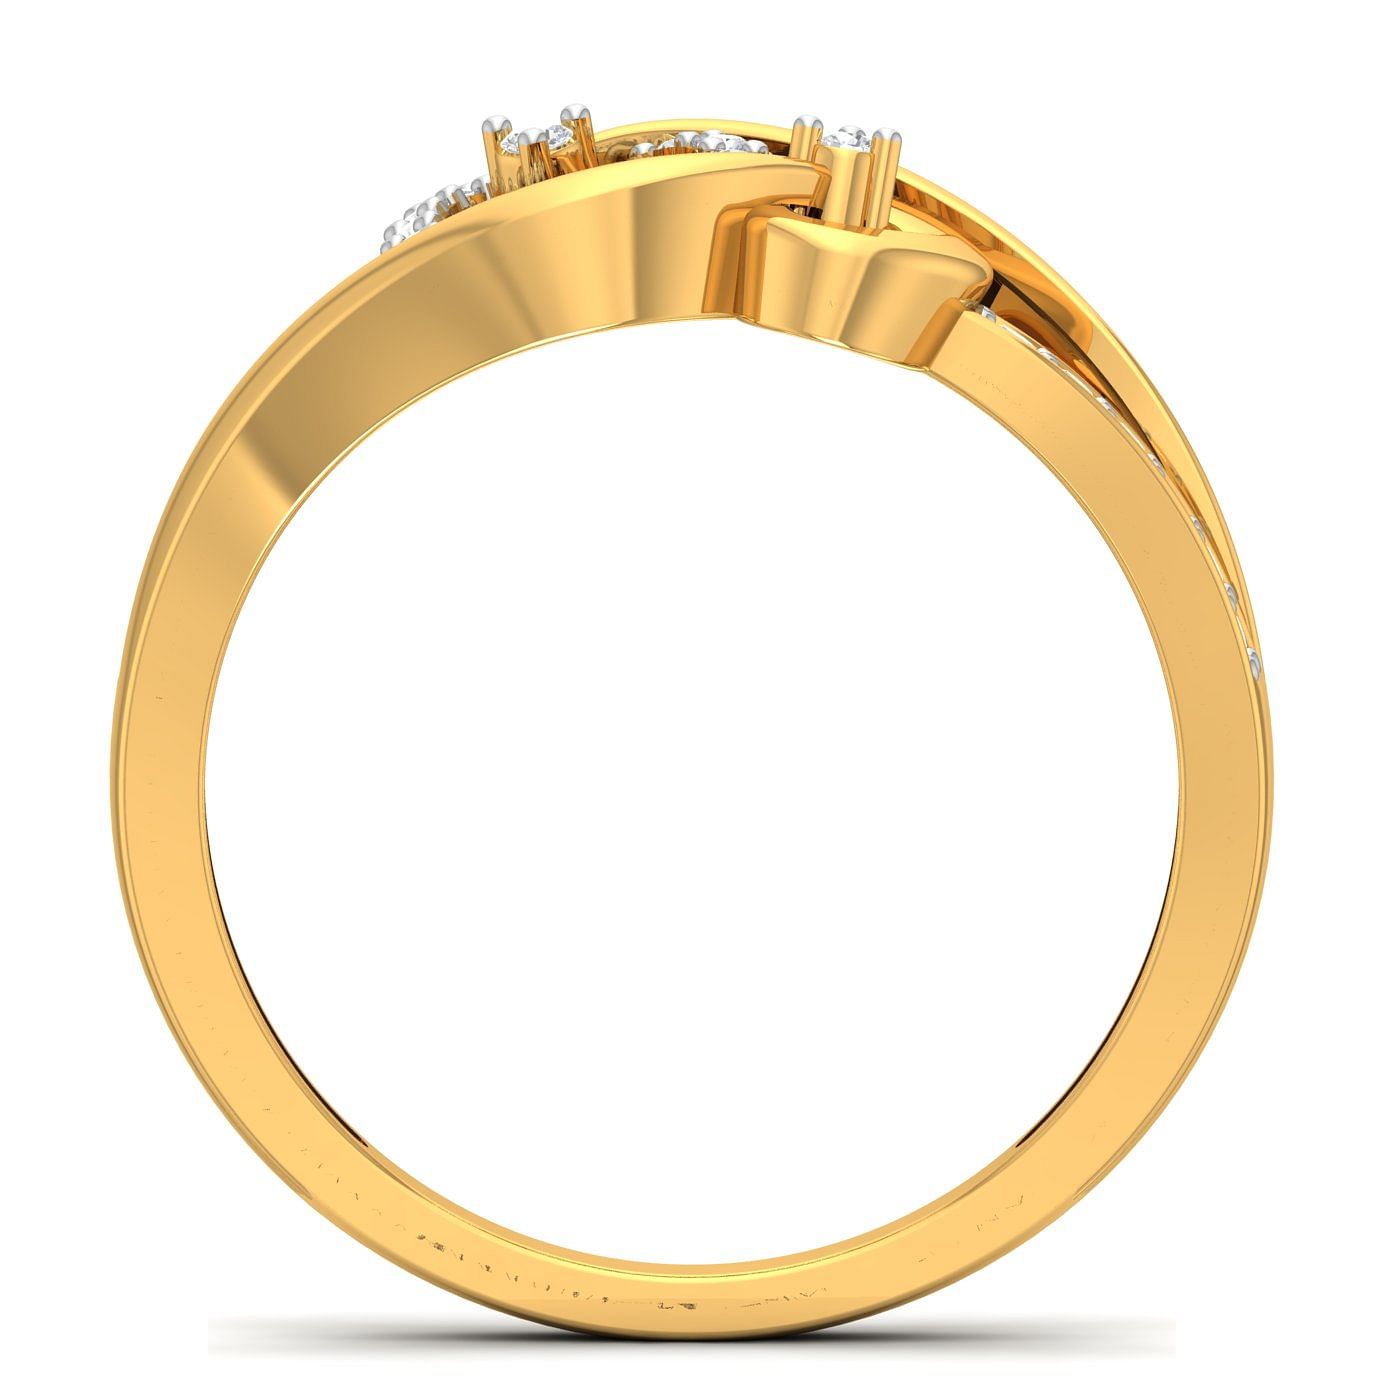 Modern Design 14k Yellow Gold Deep Dual Heart Ring For Her